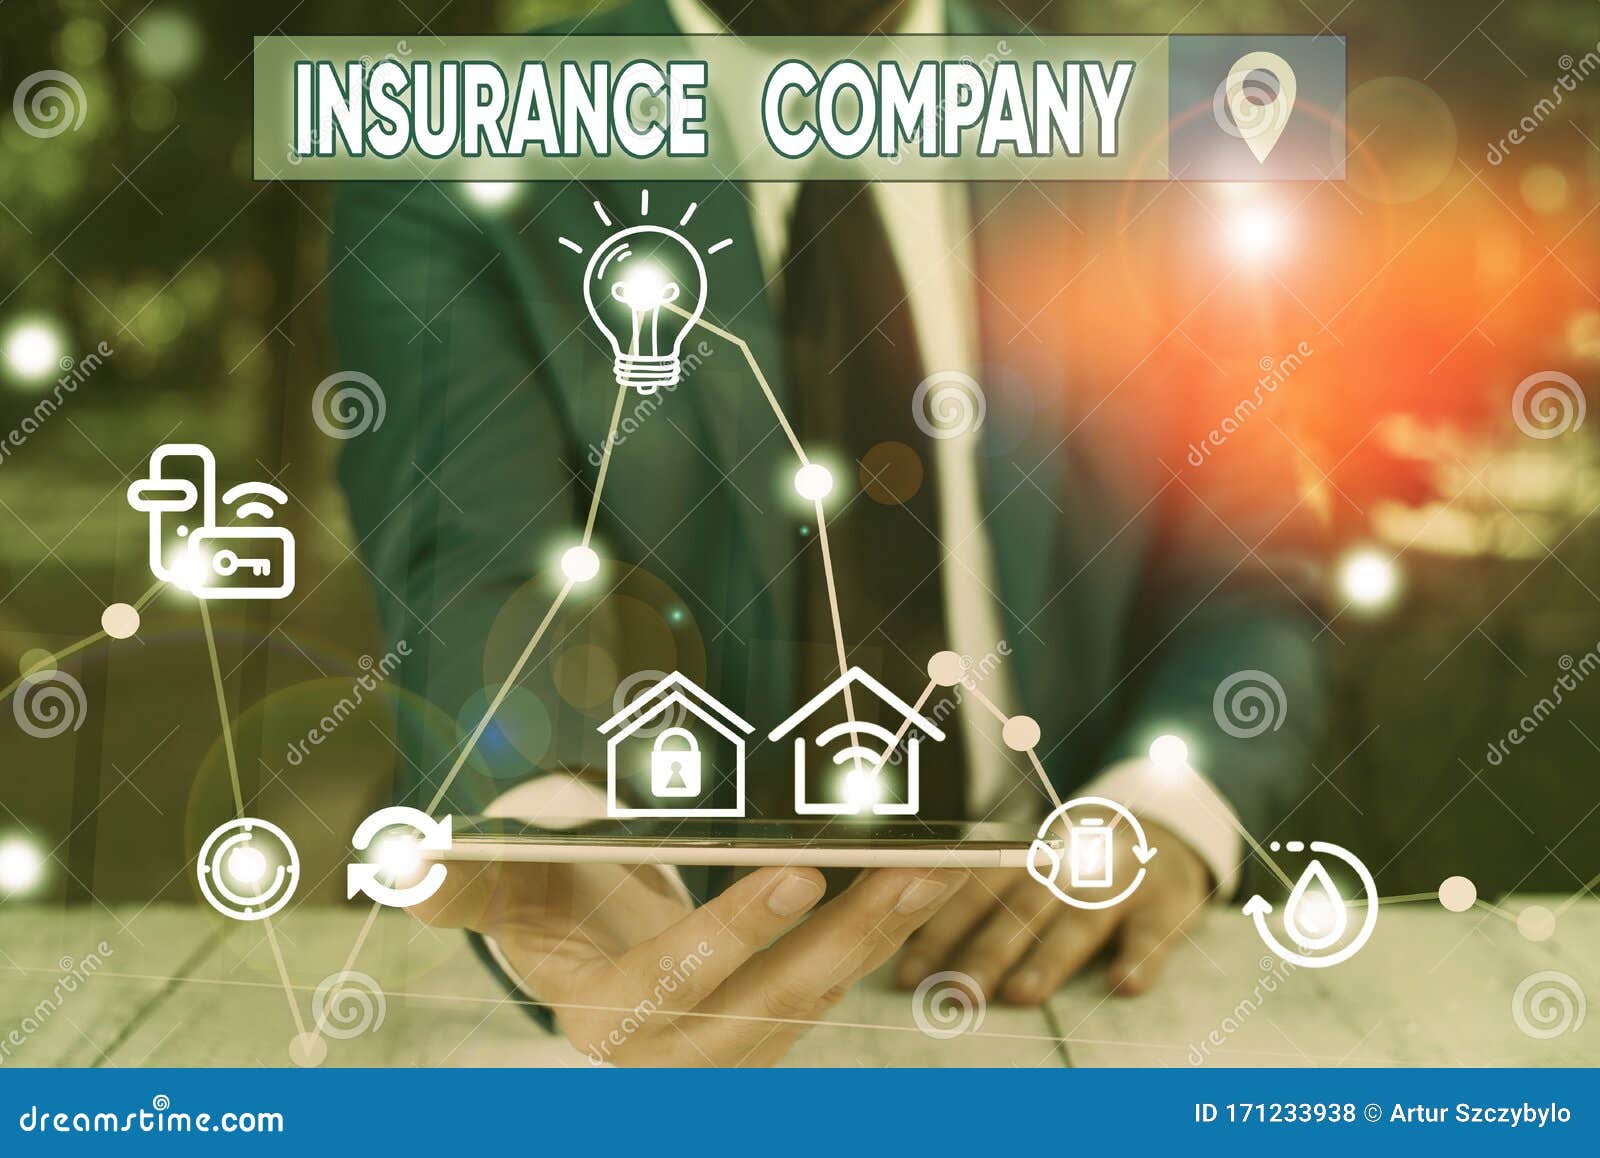 Writing company insurance